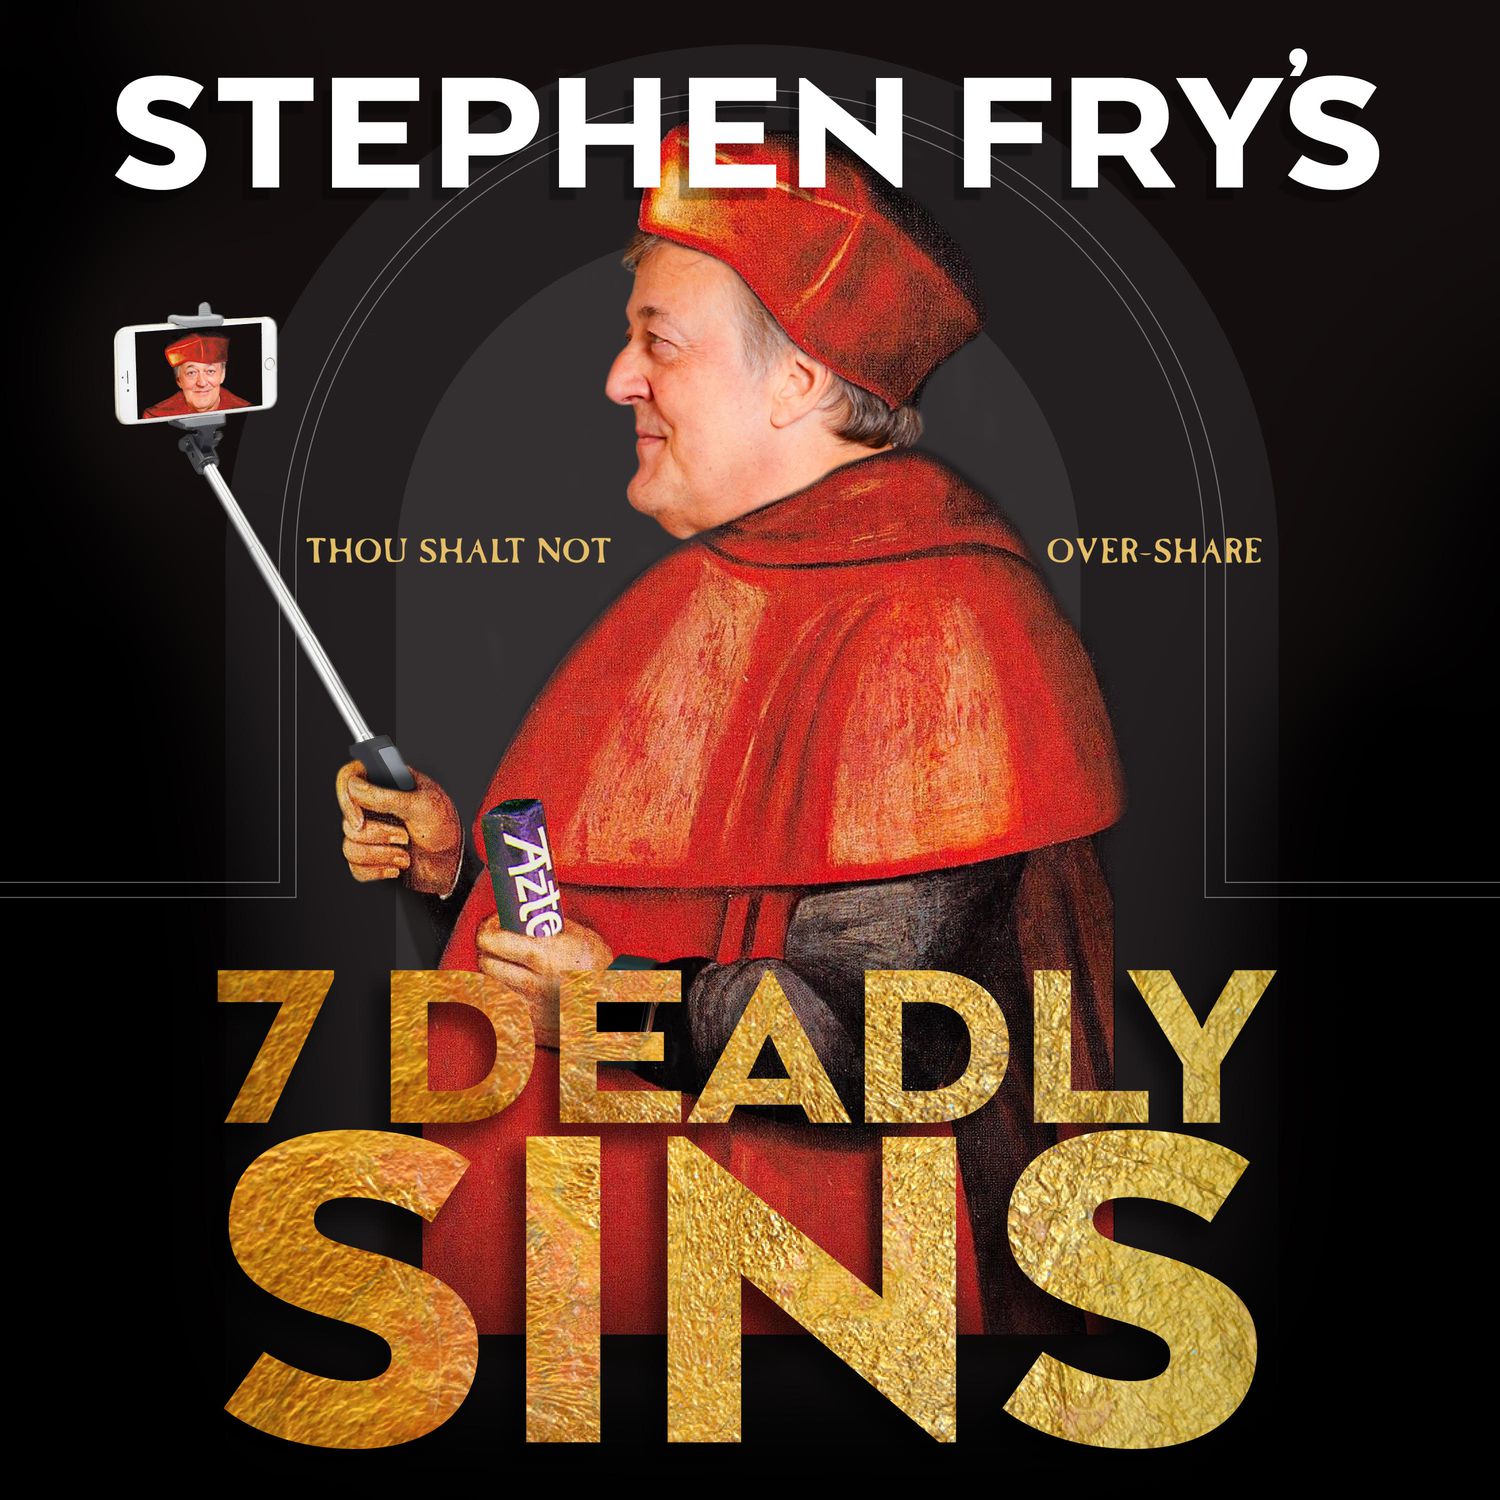 Stephen Fry's 7 Deadly Sins